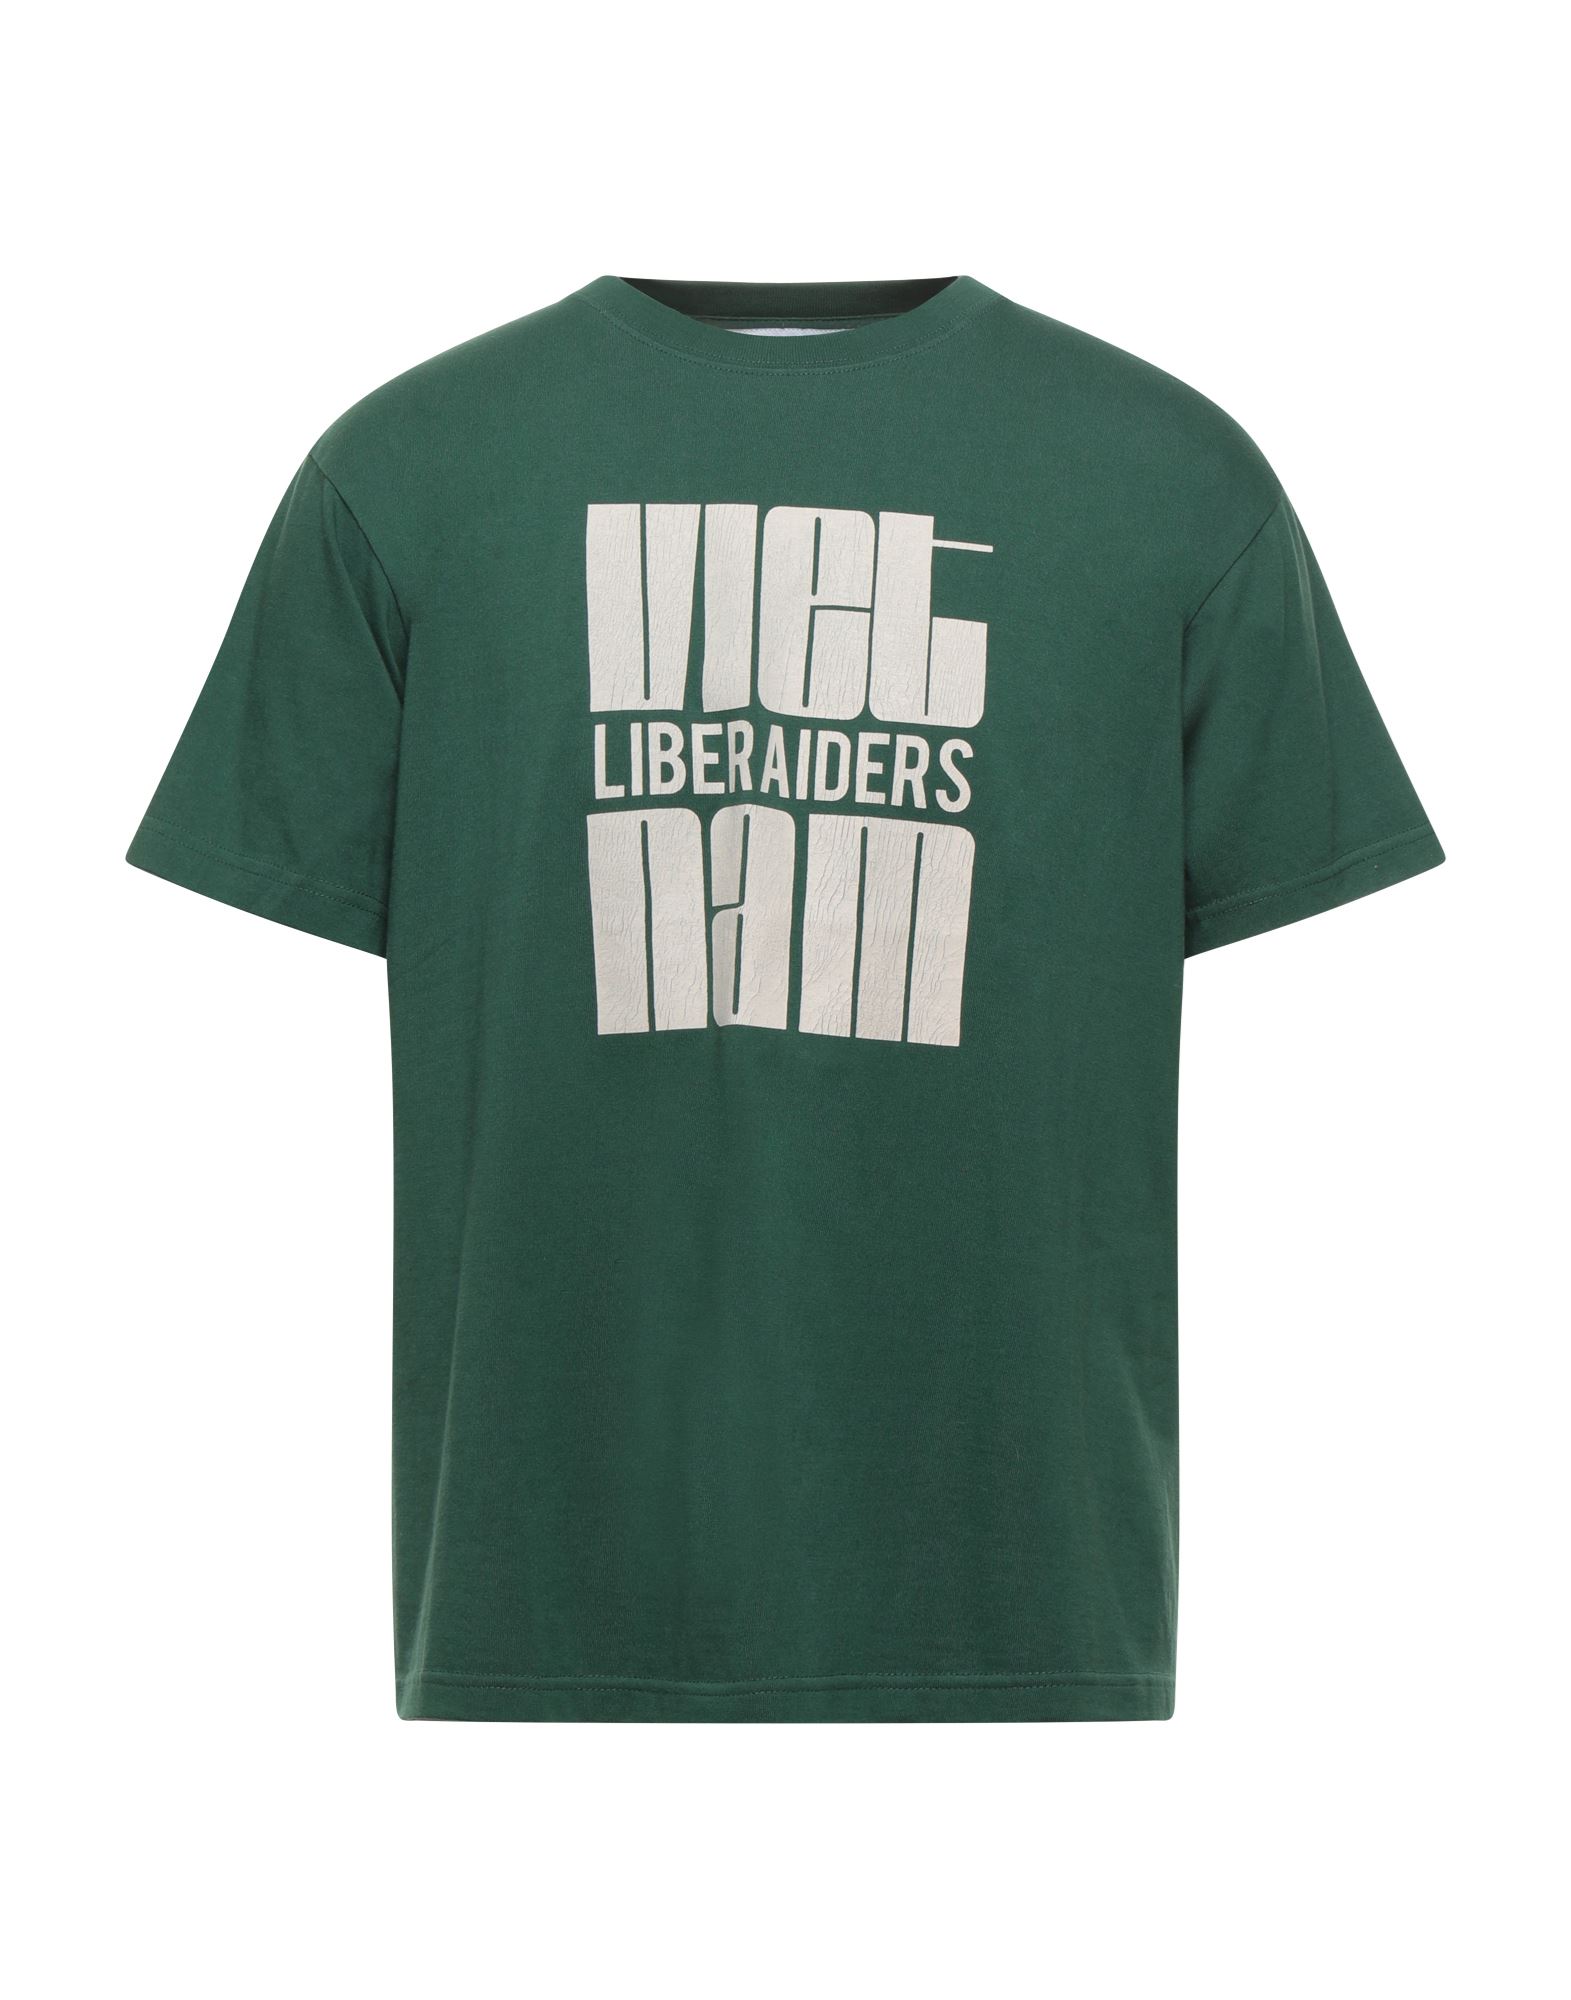 Liberaiders T-shirts In Green